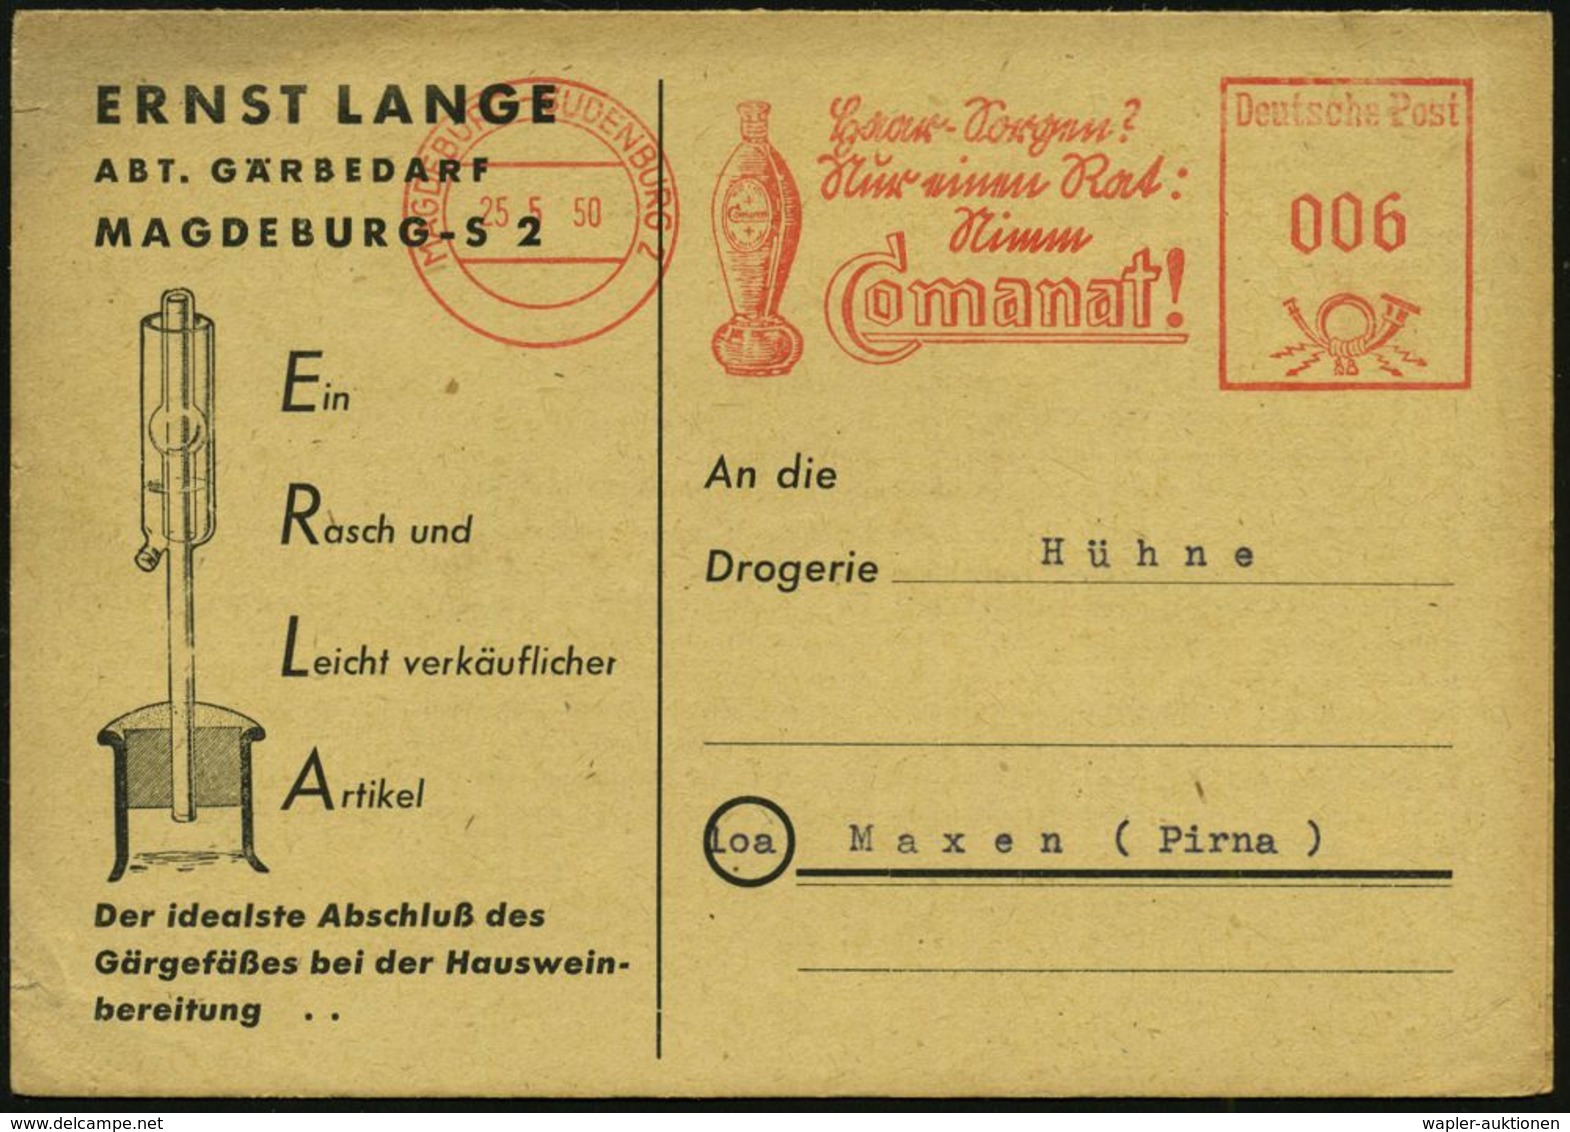 HAAR / BART / RASUR / FRISEUR : MAGDEBURG-SUDENBURG 2/ Haar-Sorgen?/ Nur Einen Rat./ Nimm/ Comanat! 1950 (25.5.) AFS, Te - Farmacia